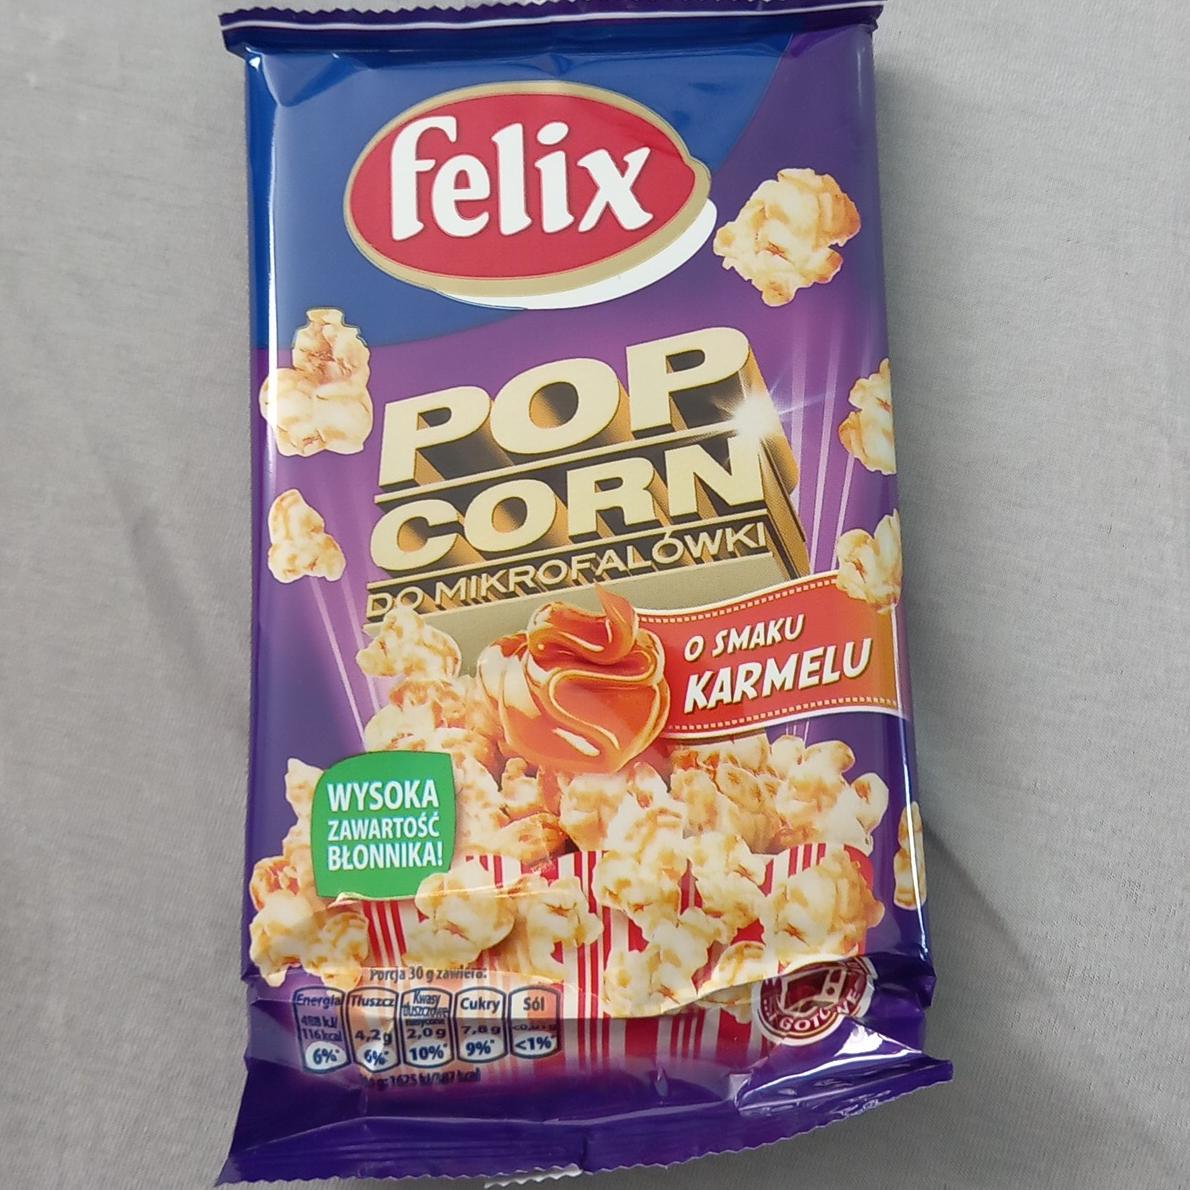 Фото - Попкорн со вкусом карамели для микроволновки Felix